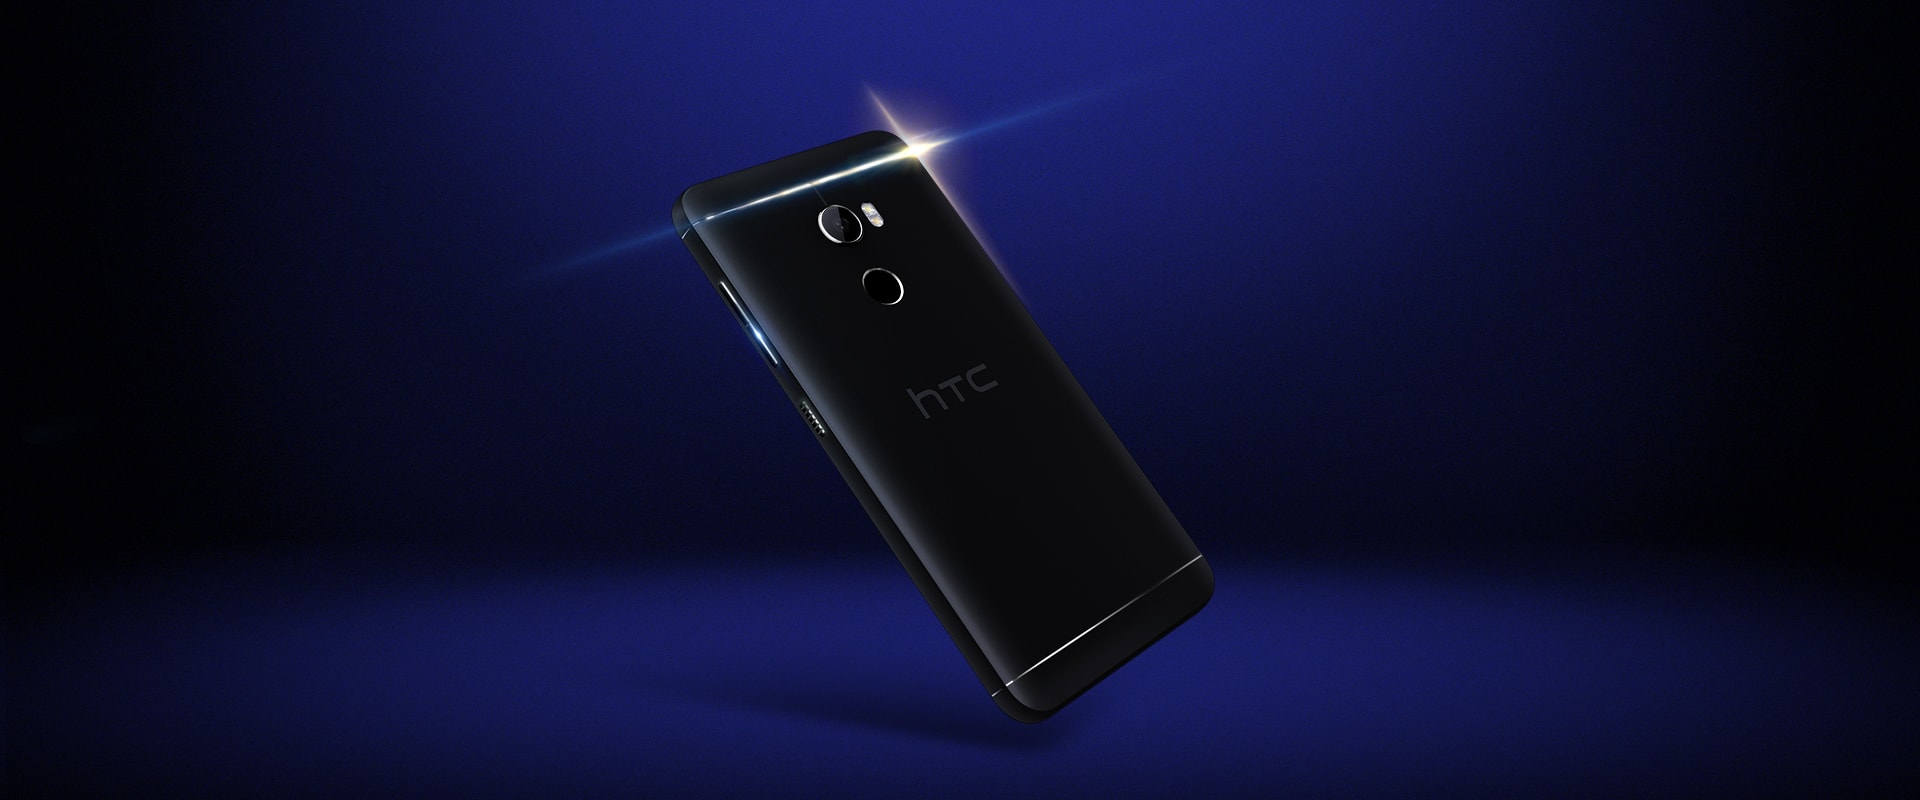 HTC one X10 announced